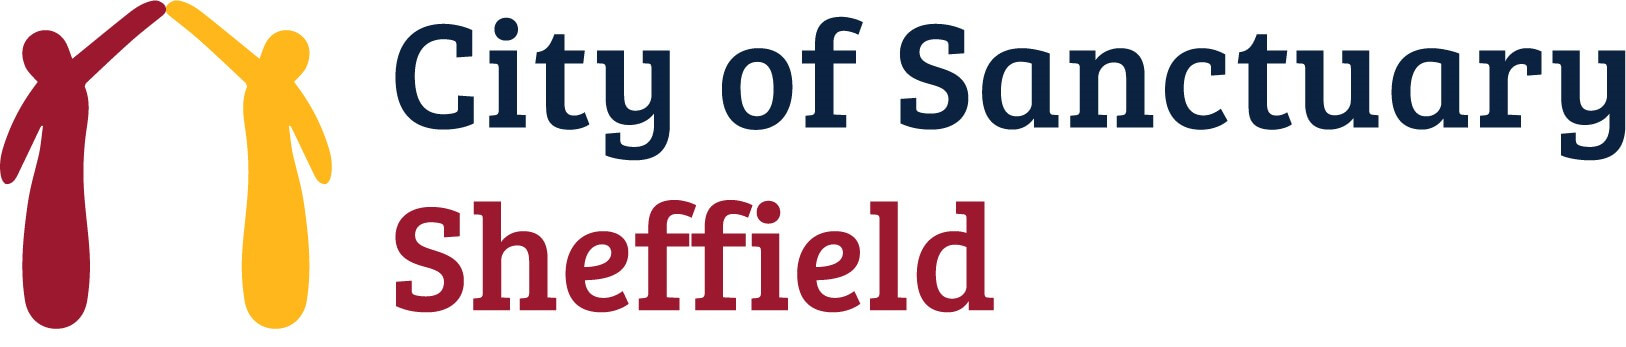 City of Sanctuary Sheffield